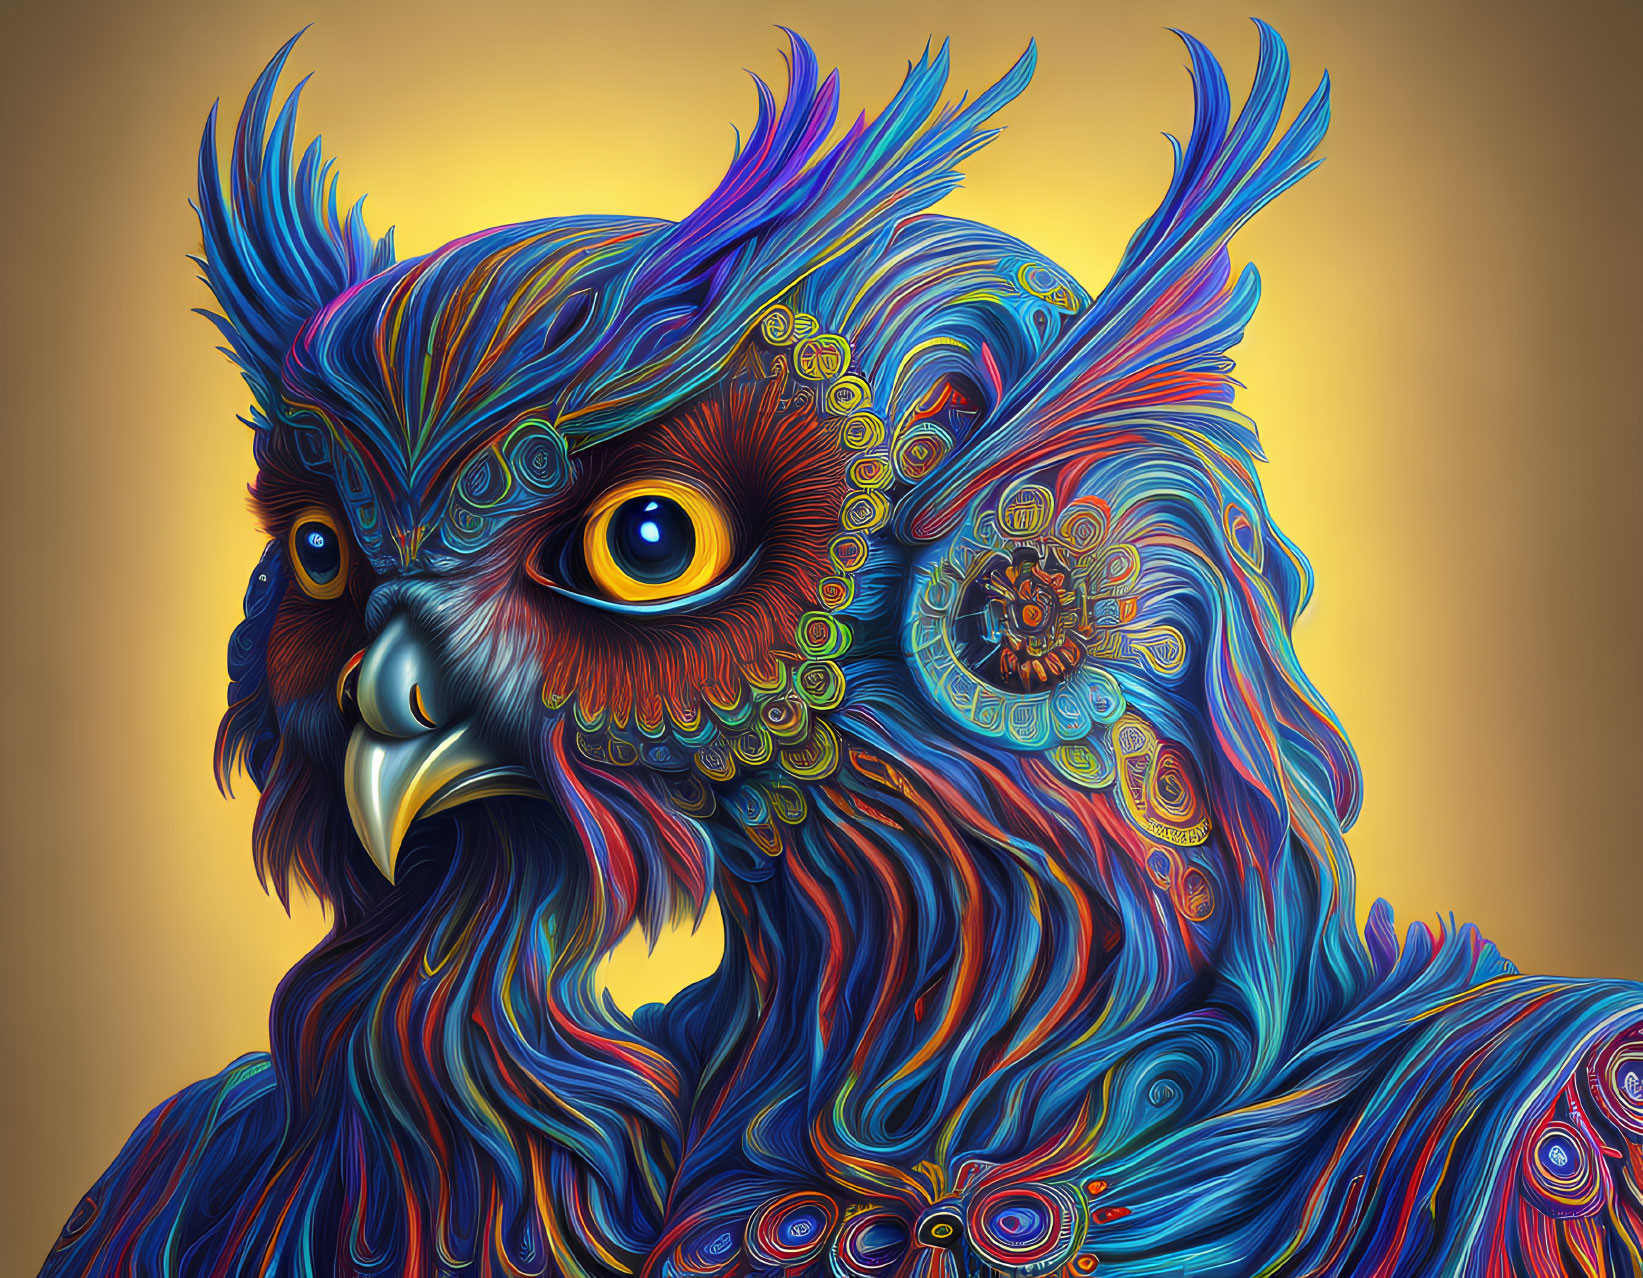 Colorful Owl Artwork with Mandala Motifs on Golden Background